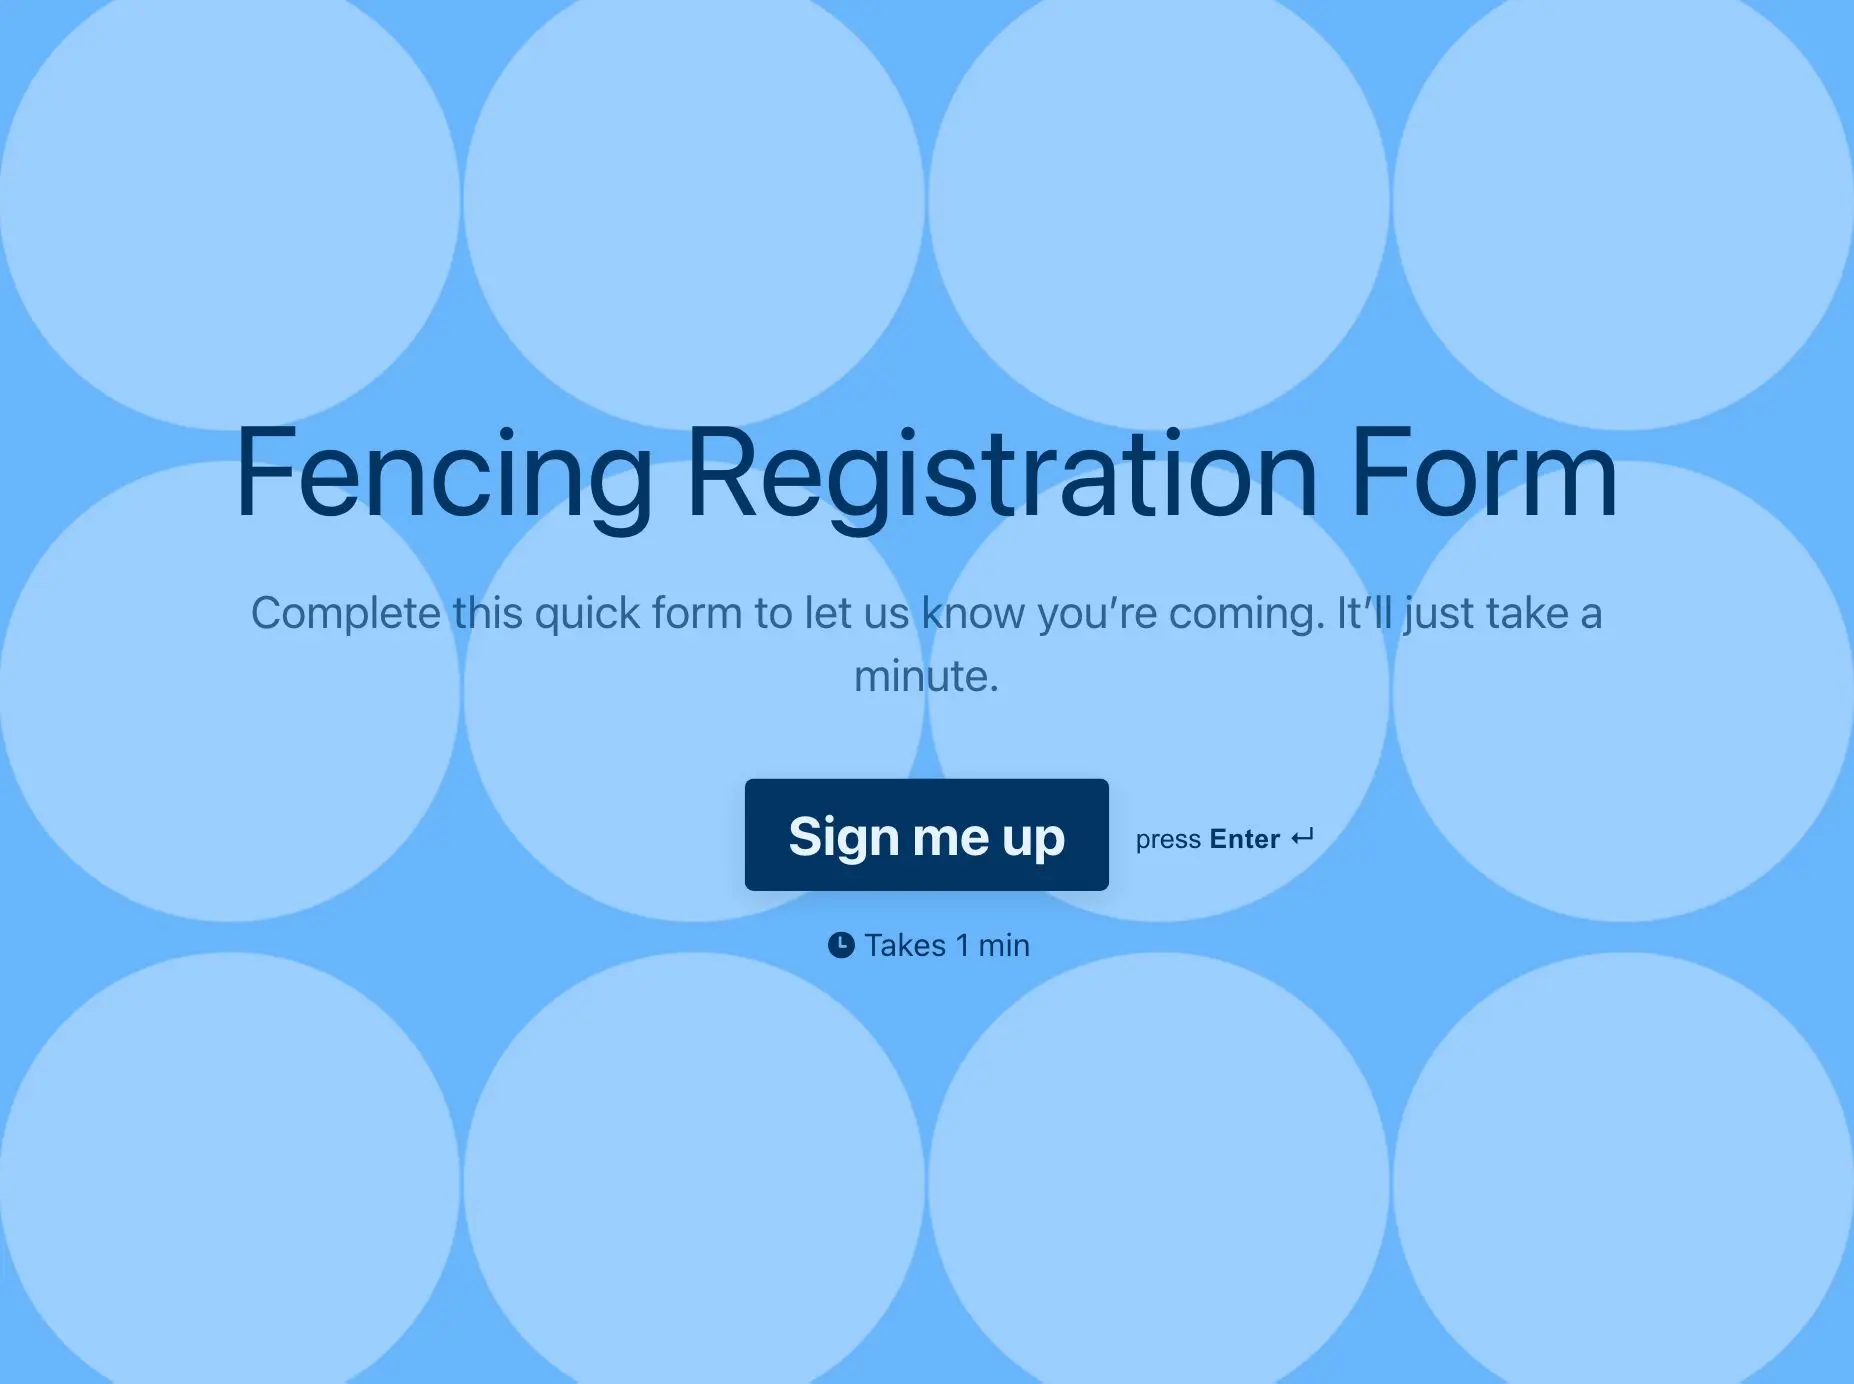 Fencing Registration Form Template Hero